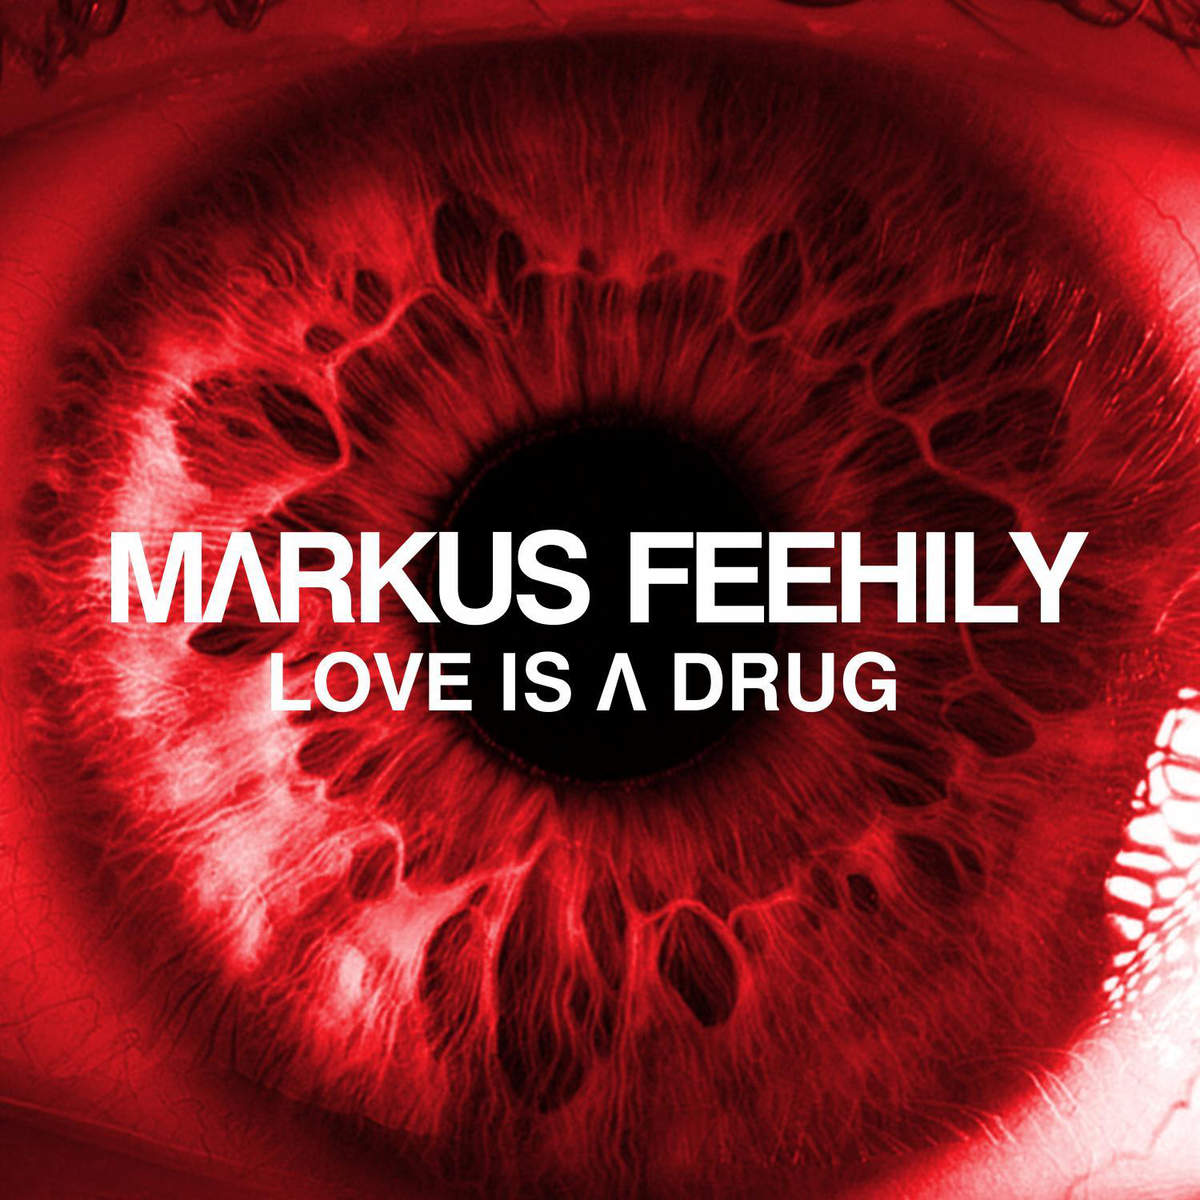 Love is drugs. Love is a drug Markus Feehily. New Politics Love is a drug. Love drug.